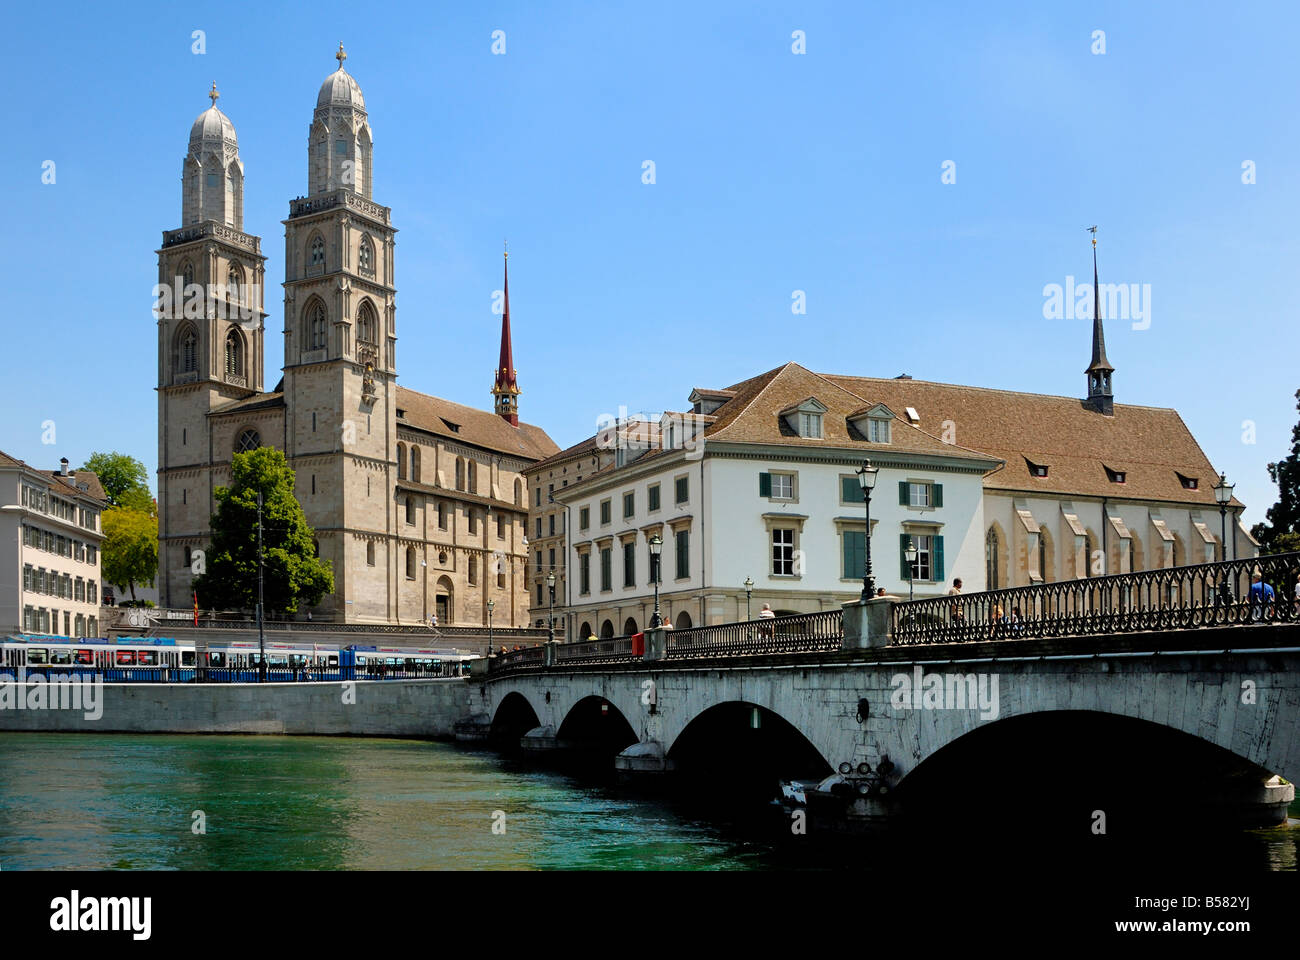 Grossmunster chiesa e Munster ponte sopra il fiume Limmat, Zurigo, Svizzera, Europa Foto Stock